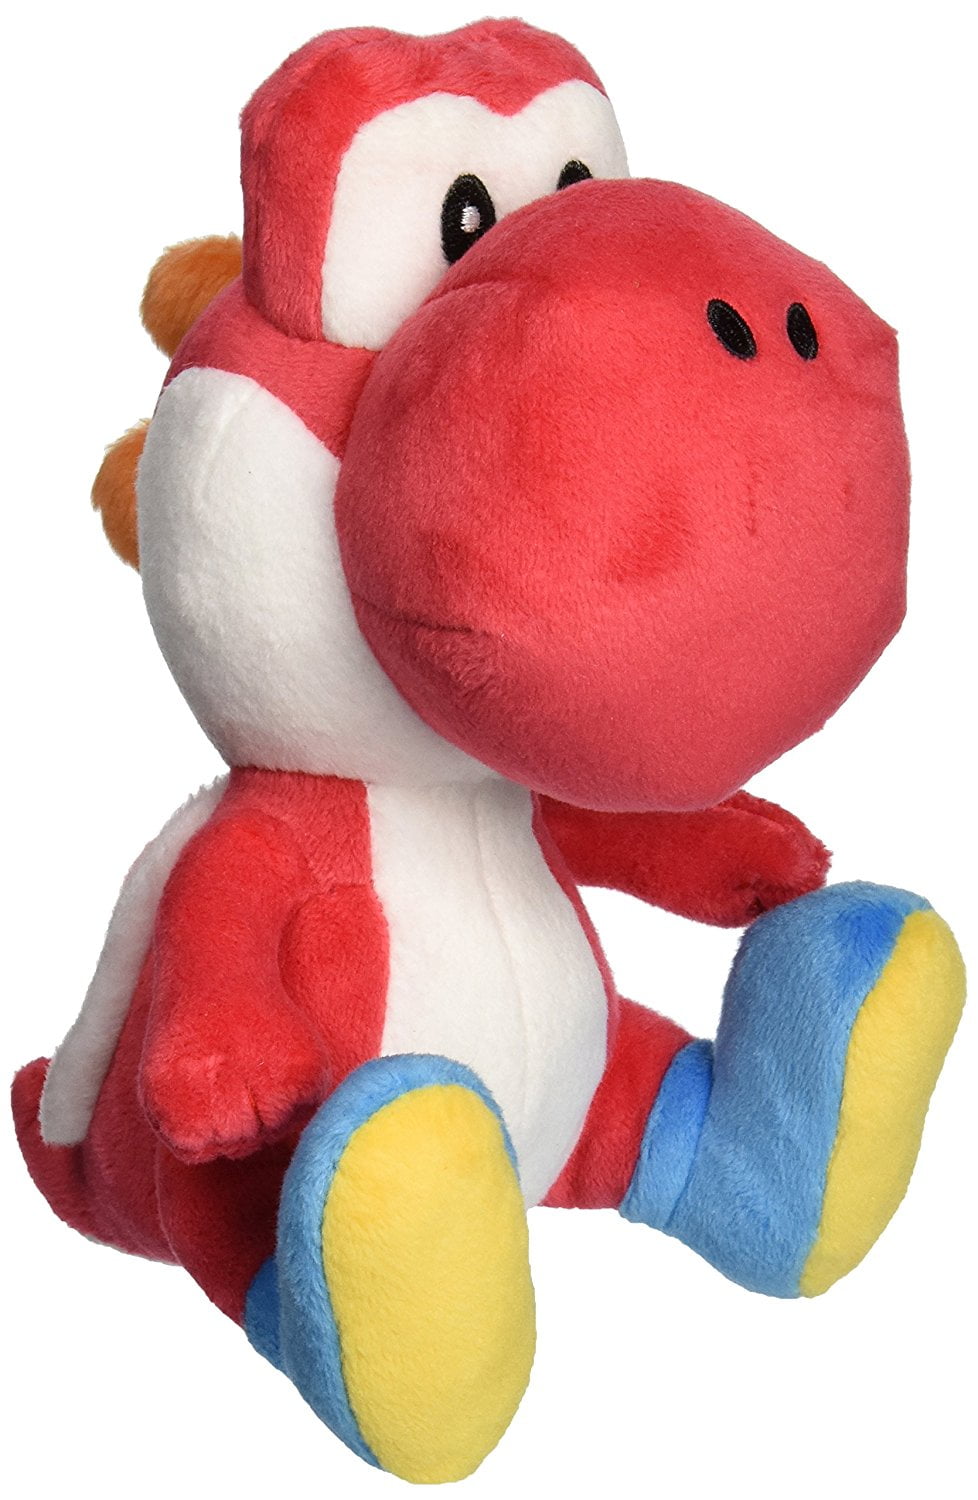 Yoshi Species Series Super Mario Bros Plush Toy Stuffed Animal Different Colors 